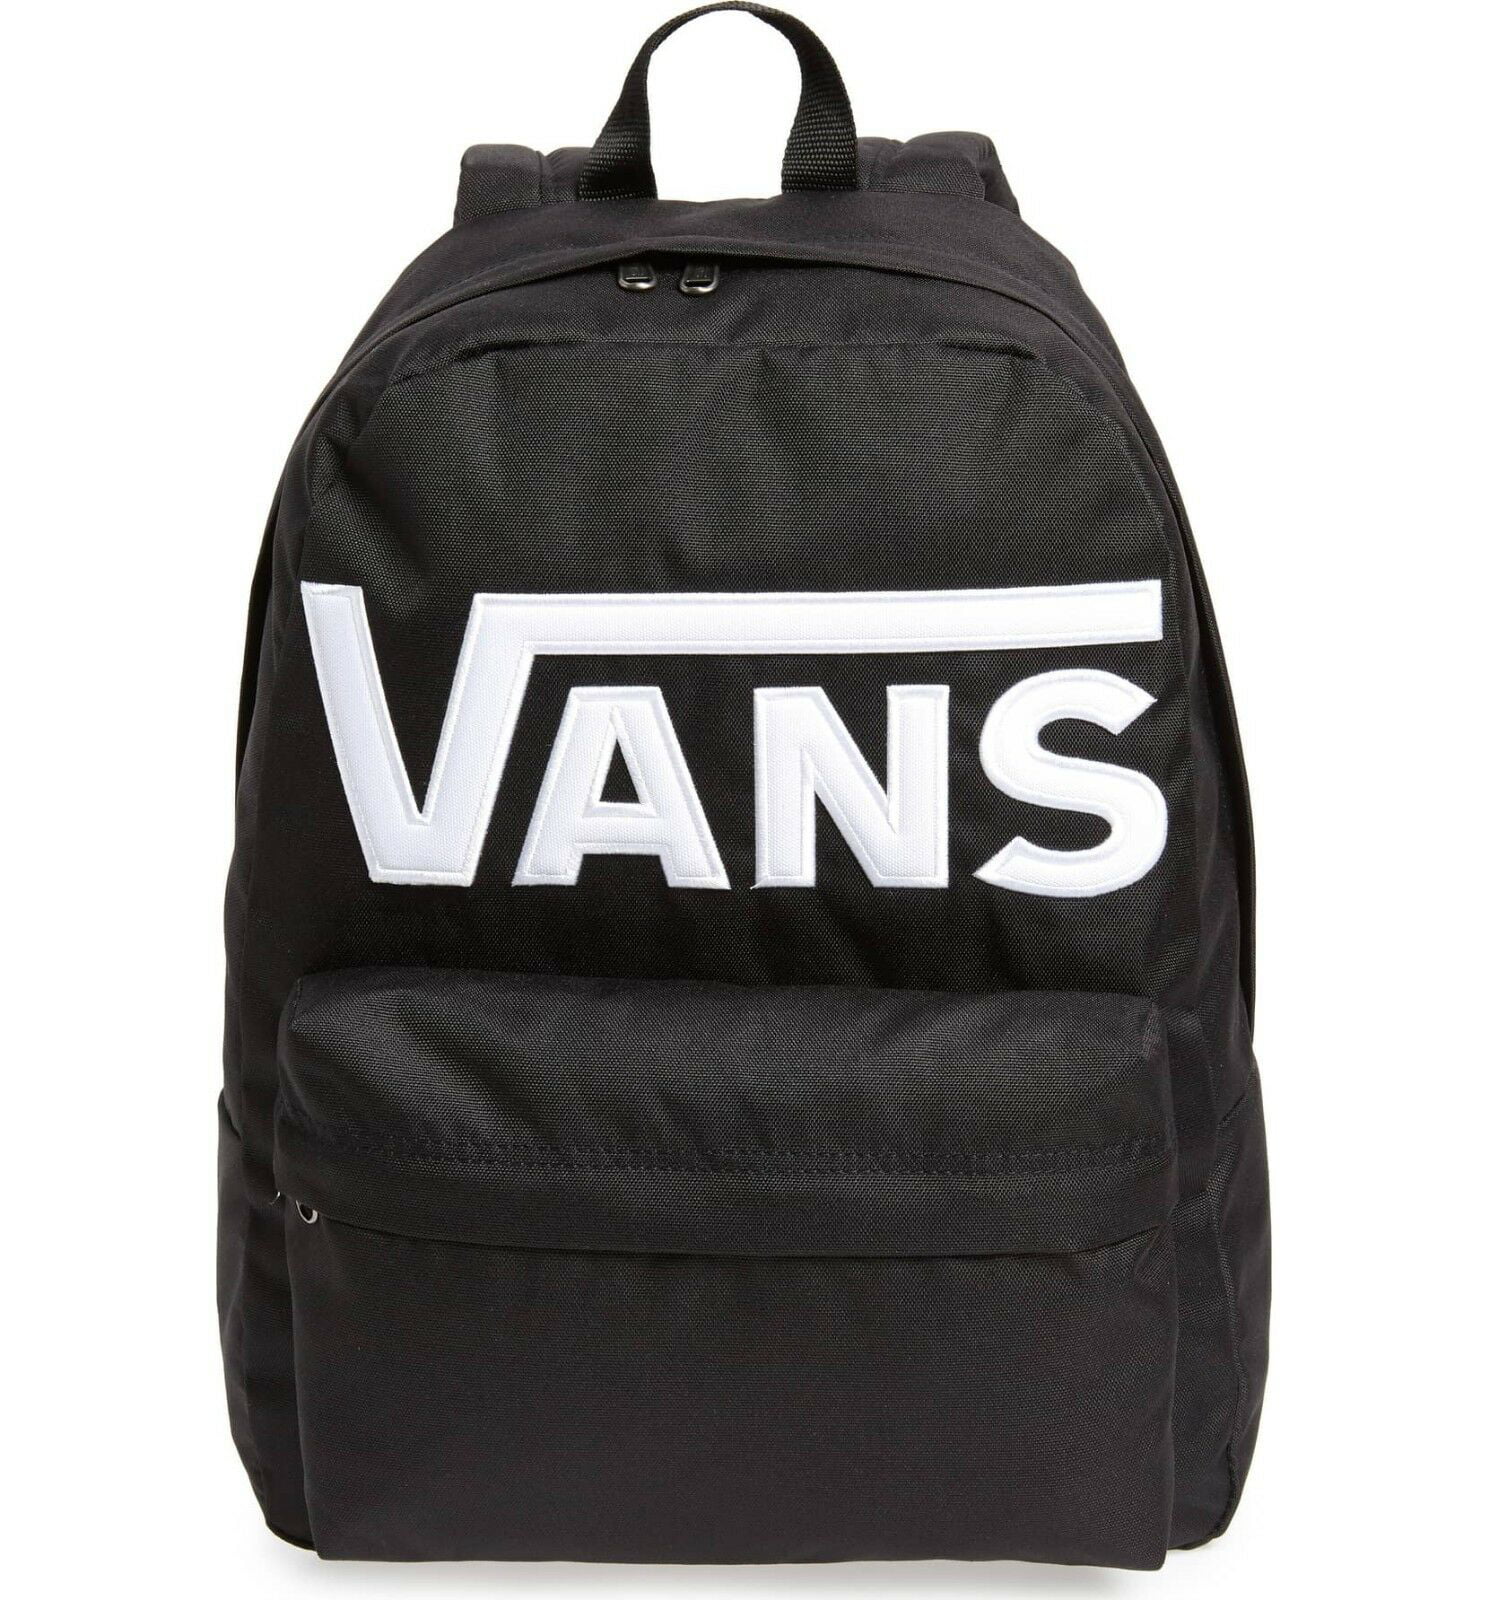 vans backpacks for school